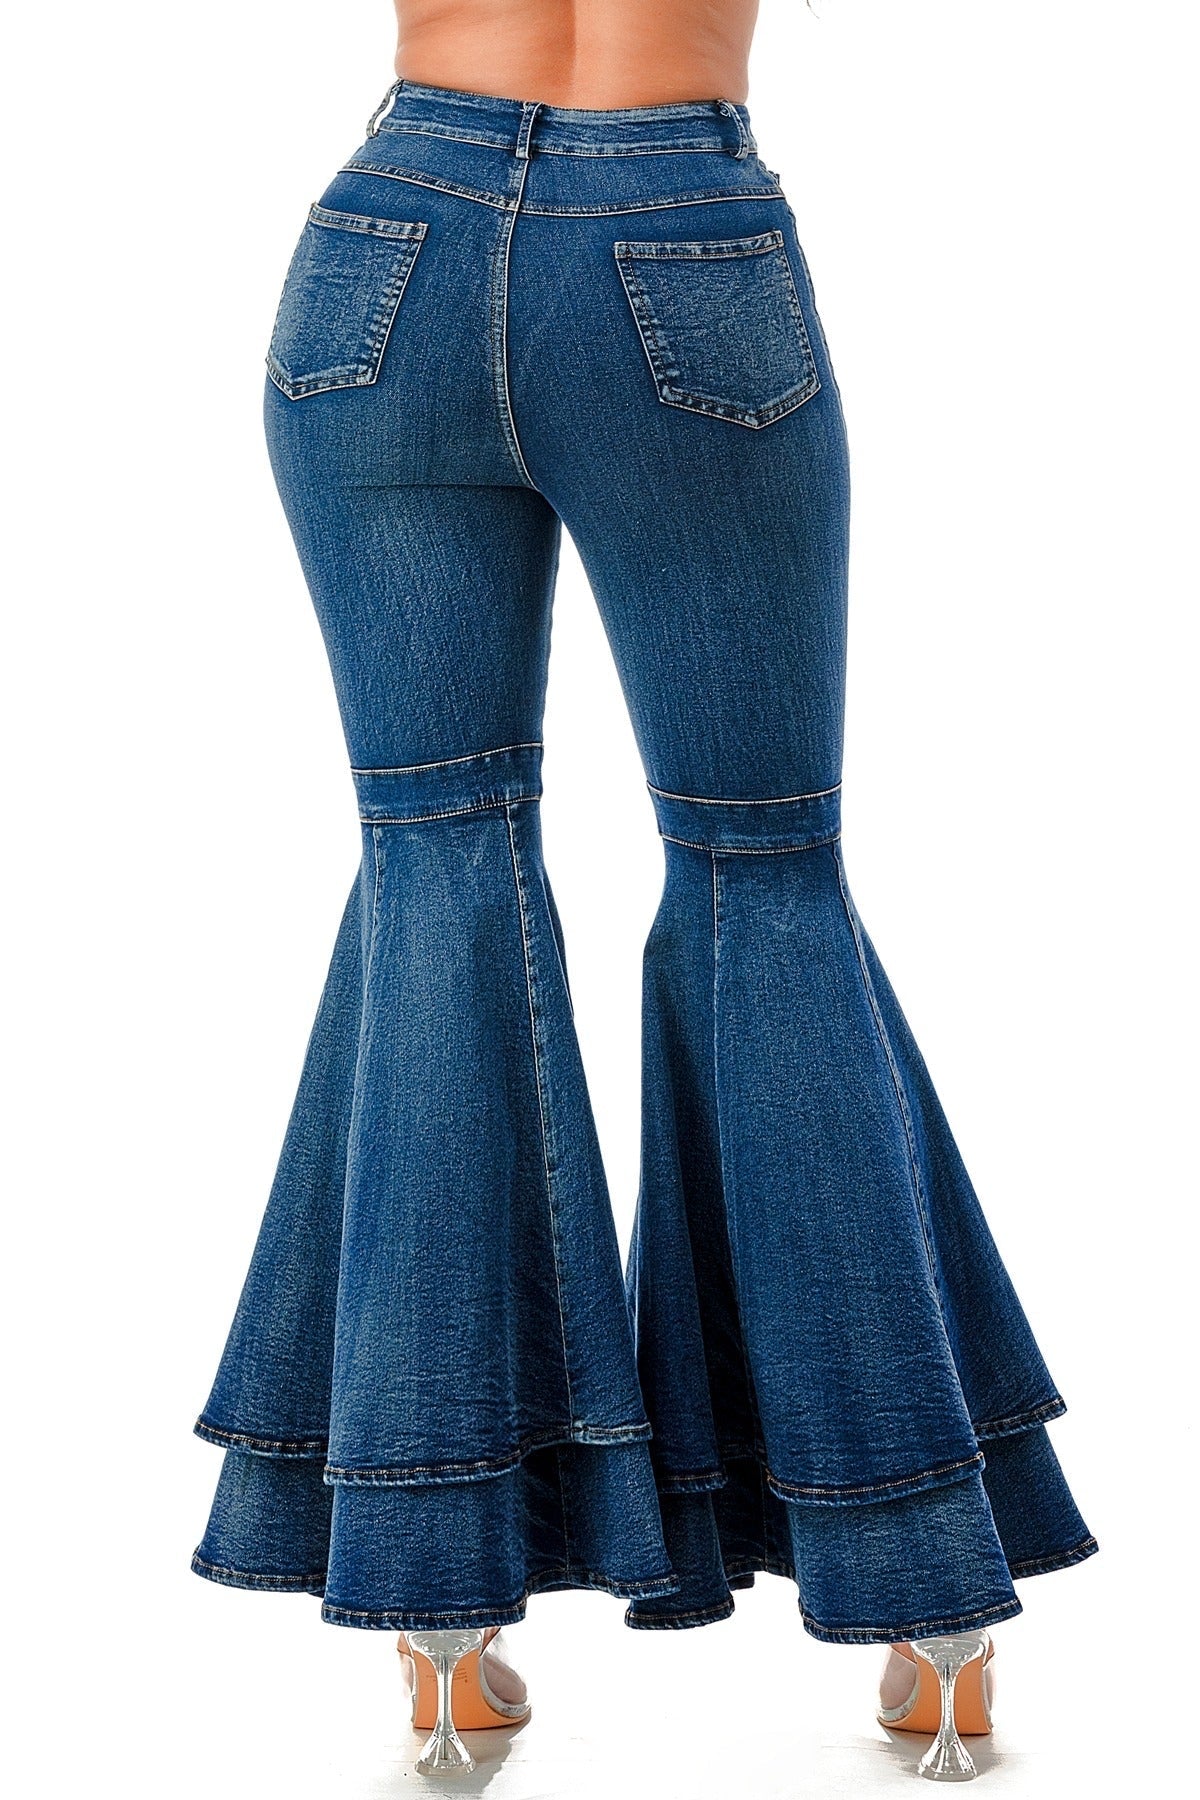 Men Boy Bell Bottom Jeans 60s Vintage Flared Denim Pants Retro Wide Leg  Trousers | eBay